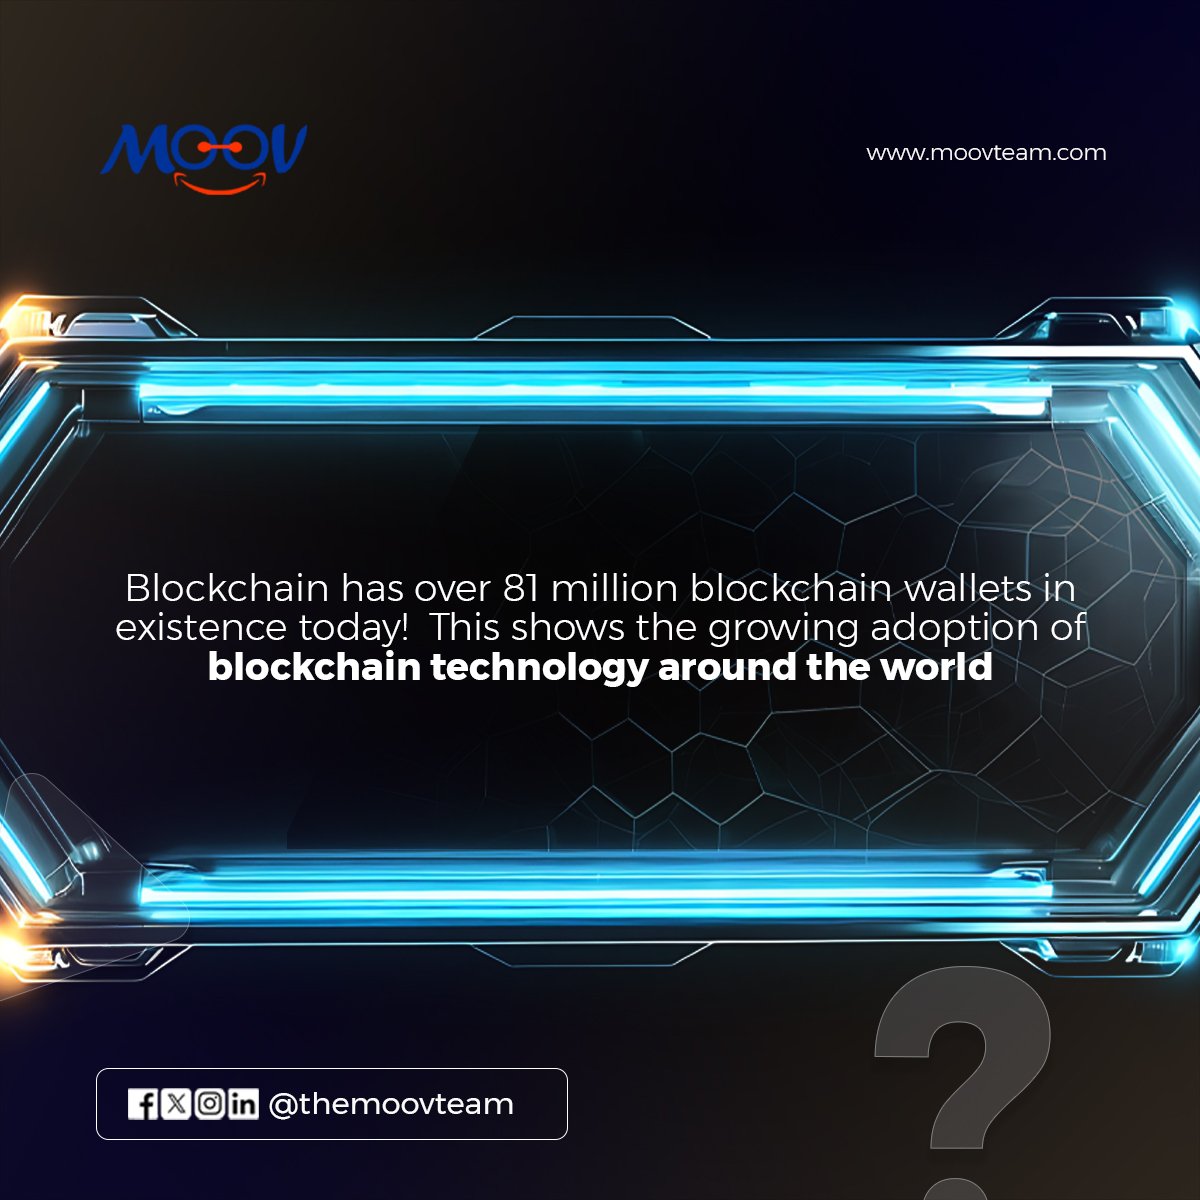 Fun facts with #Moov

#Blockchain #Web3 #BlockchainMarketing #BlockchainEducation #blockchainevents #Crypto #BitcoinHalving